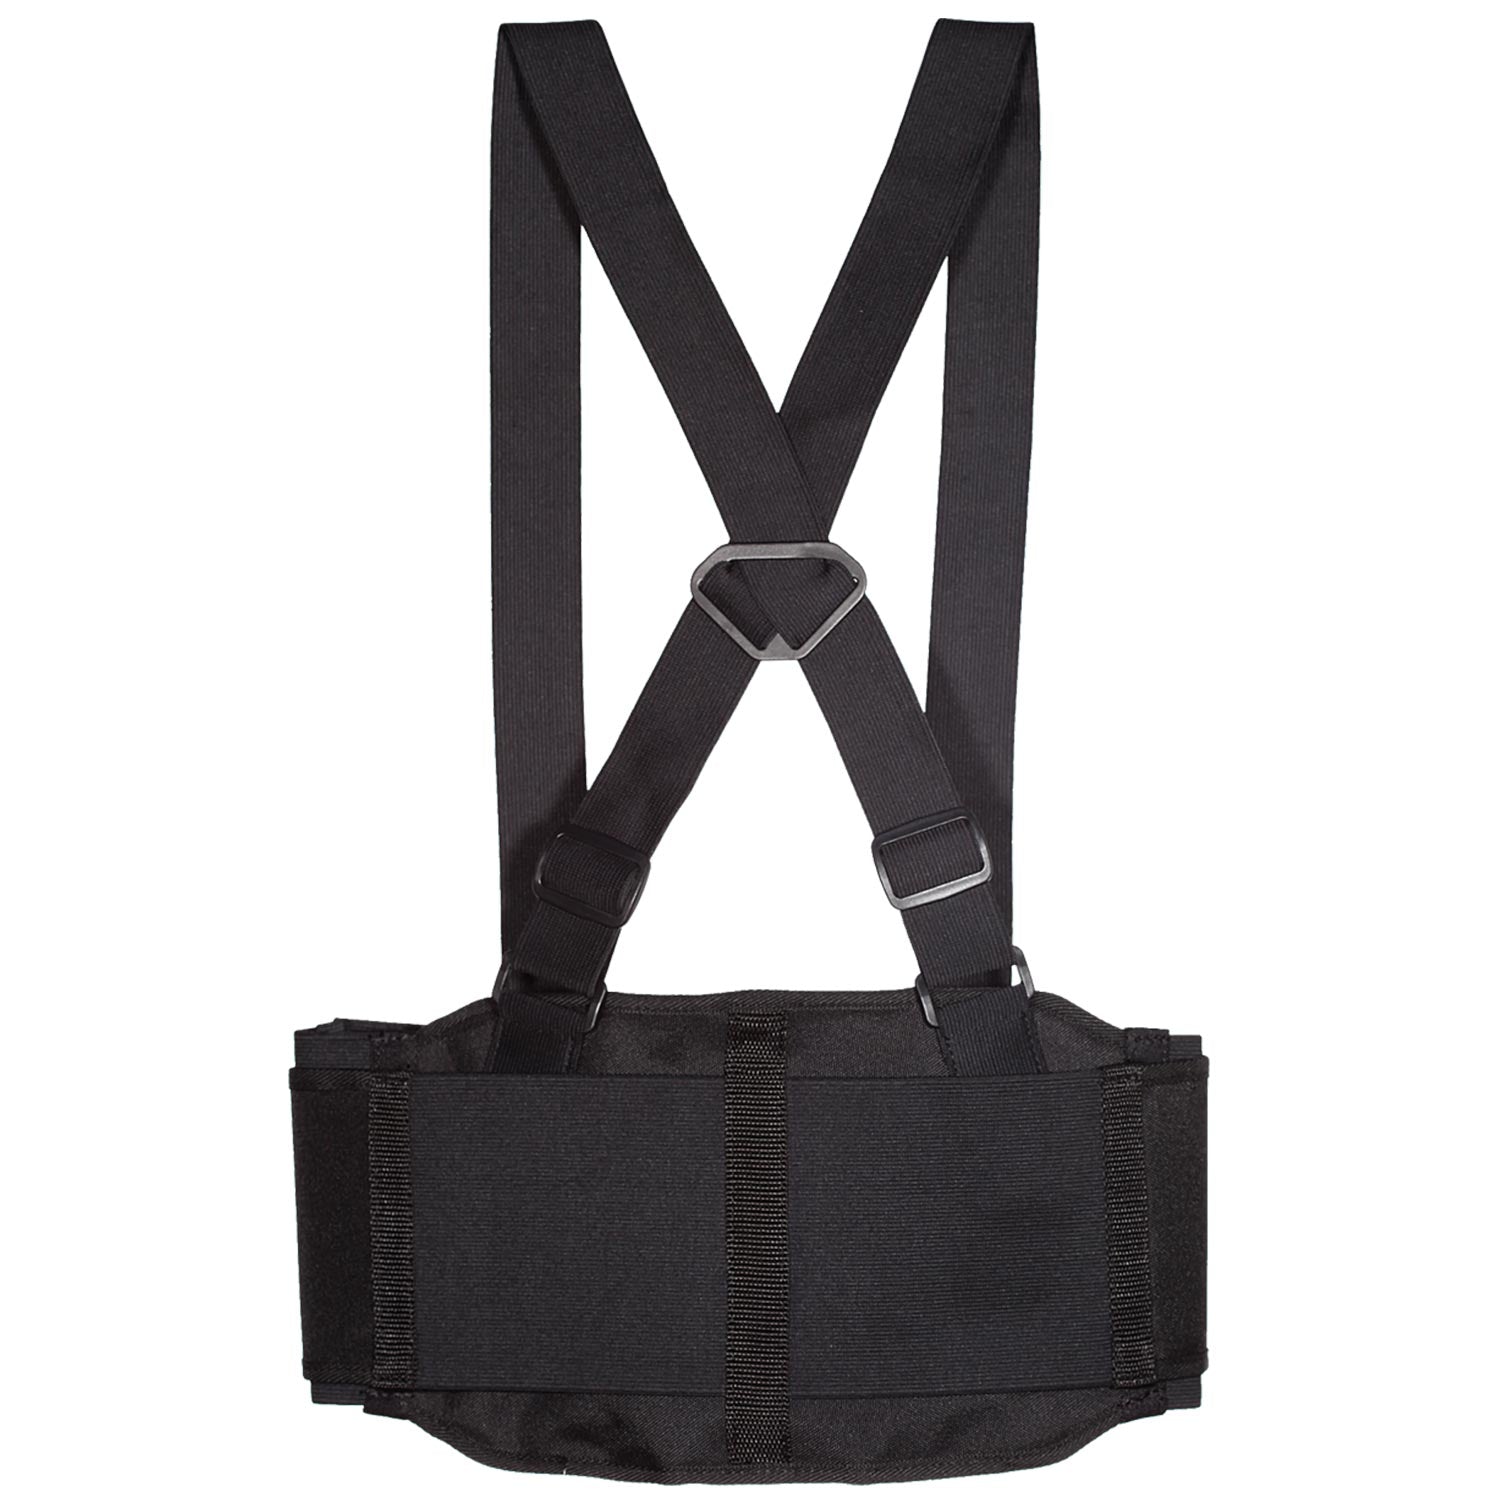 Safe Handler Black, 4X-Large, 56 in.- 68 in. Lifting Support Weight Belt,  Lower Back Brace, Dual Adjustable Straps, (3-Pack) BLSH-ES-4XL-2LB-3 - The  Home Depot